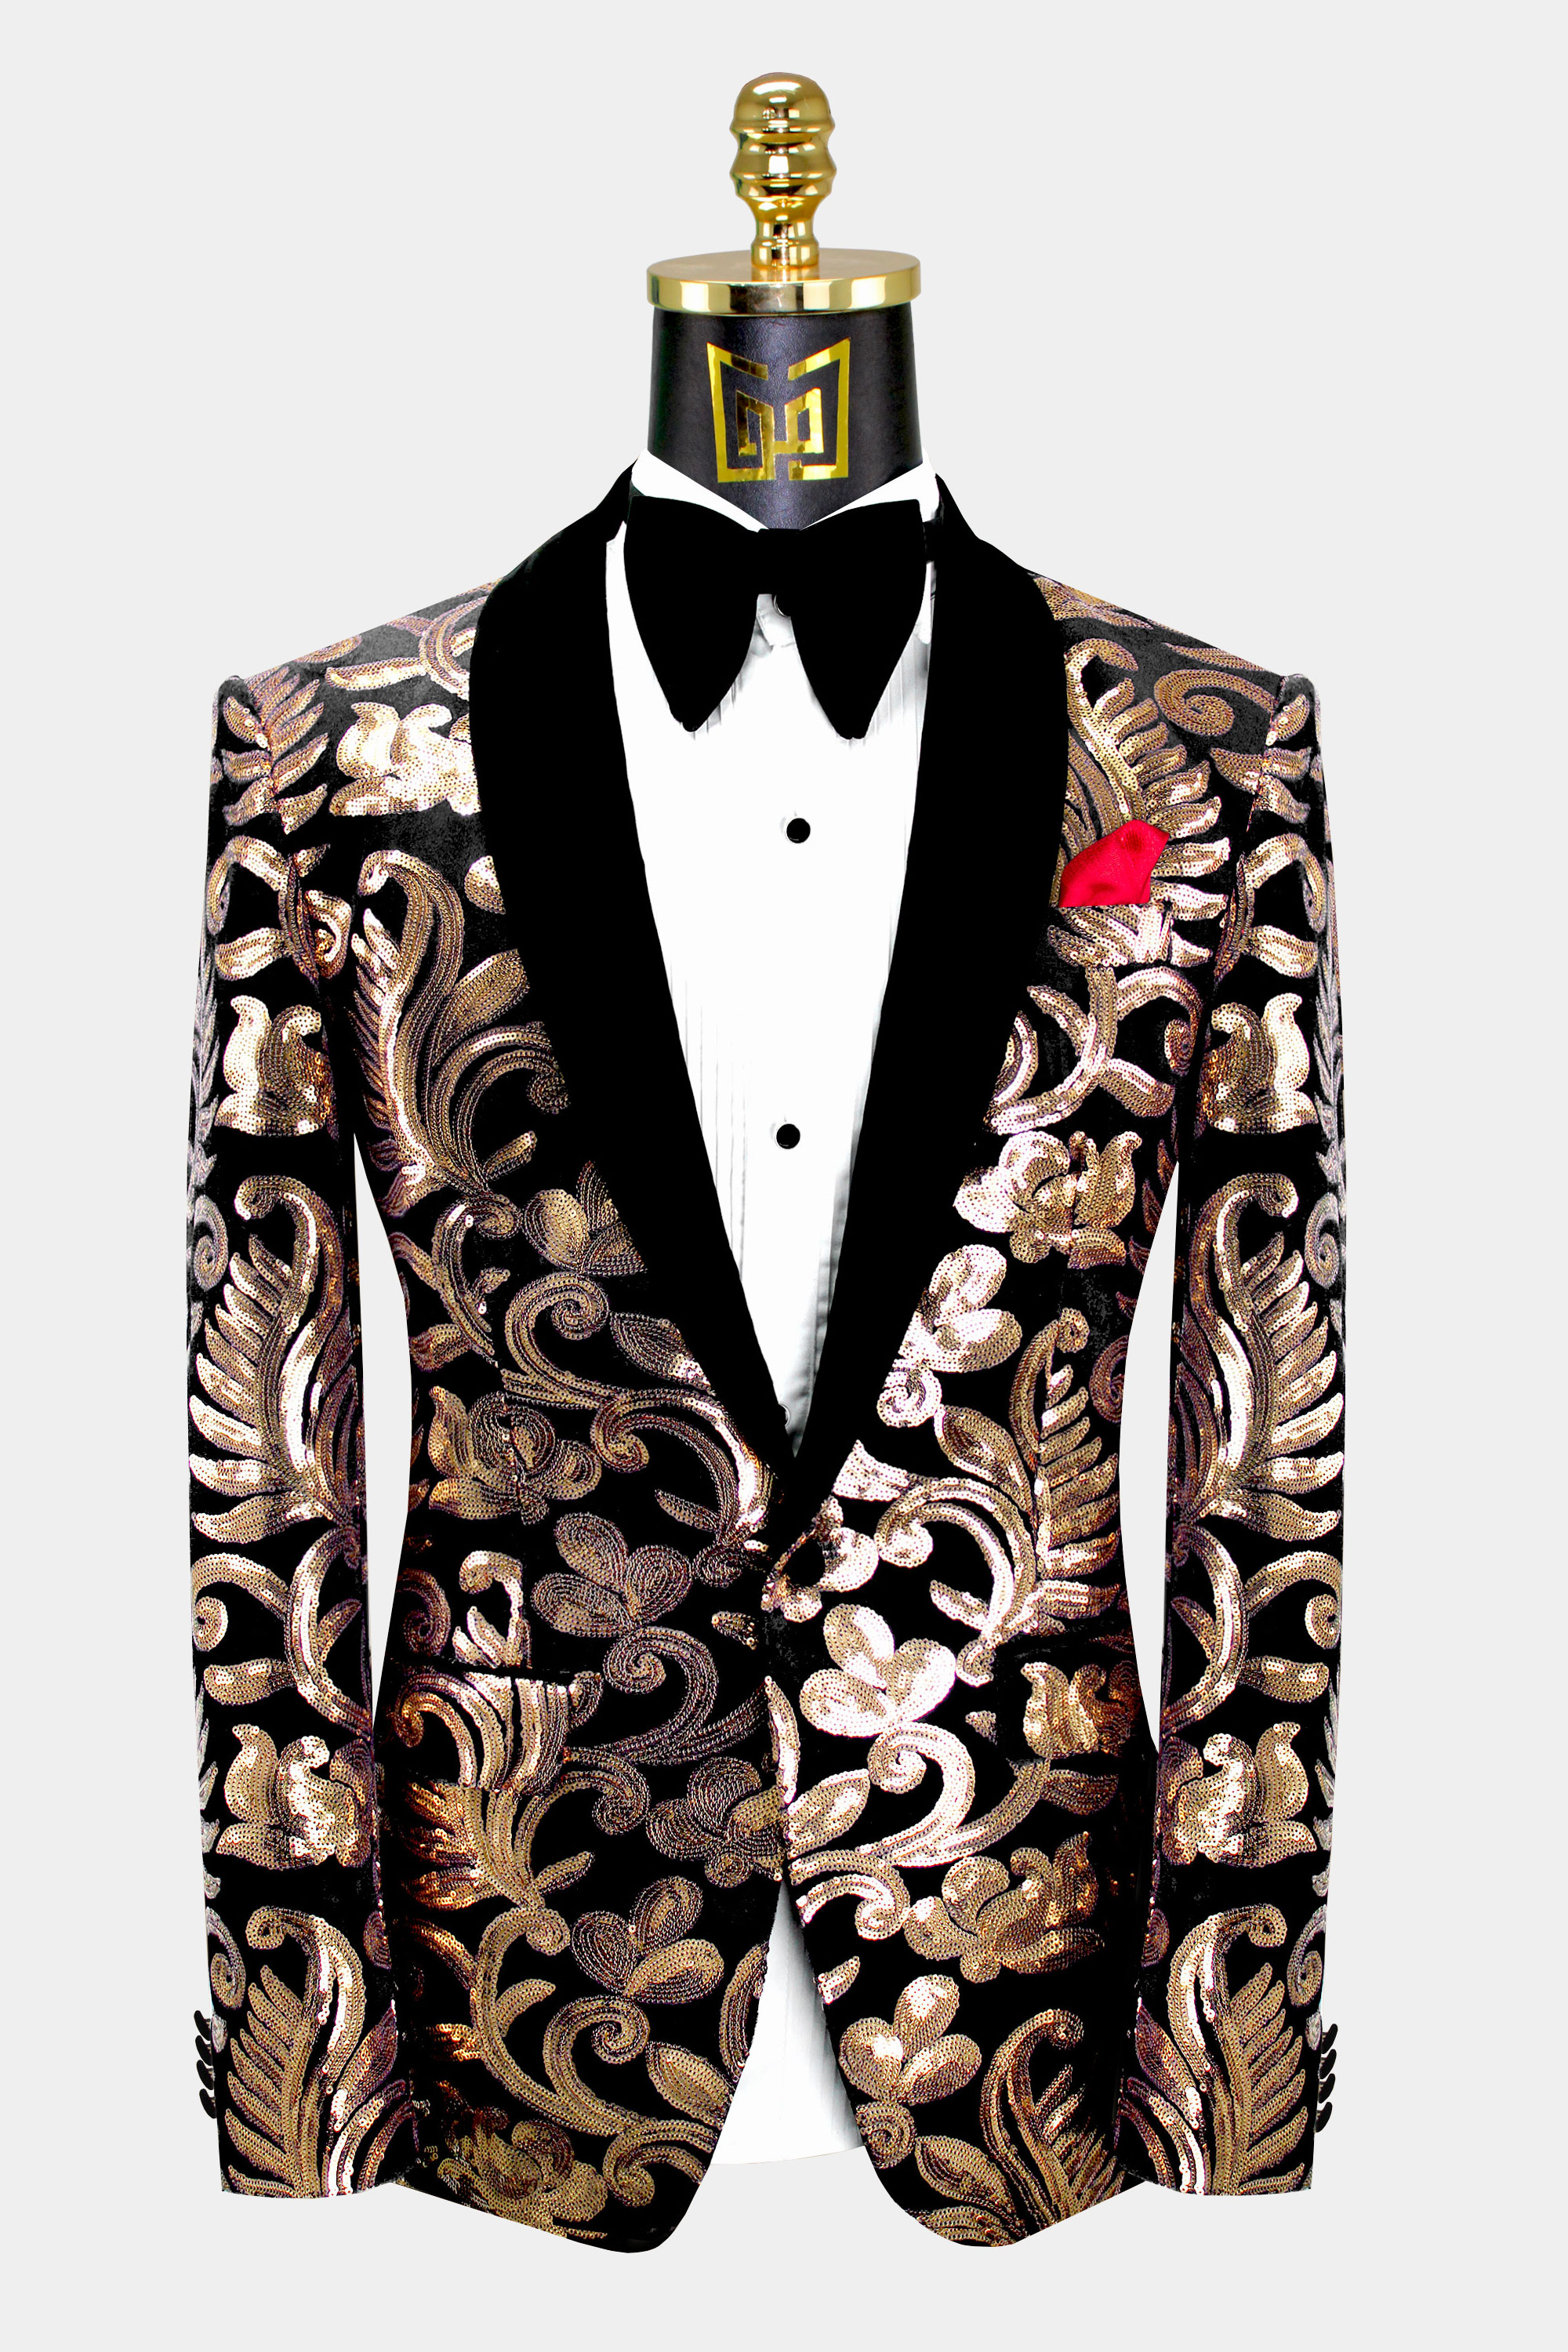 COOFANDY Mens Floral Tuxedo Suit Jacket Slim Fit Dinner Jacket Party Prom Wedding Blazer Jackets 